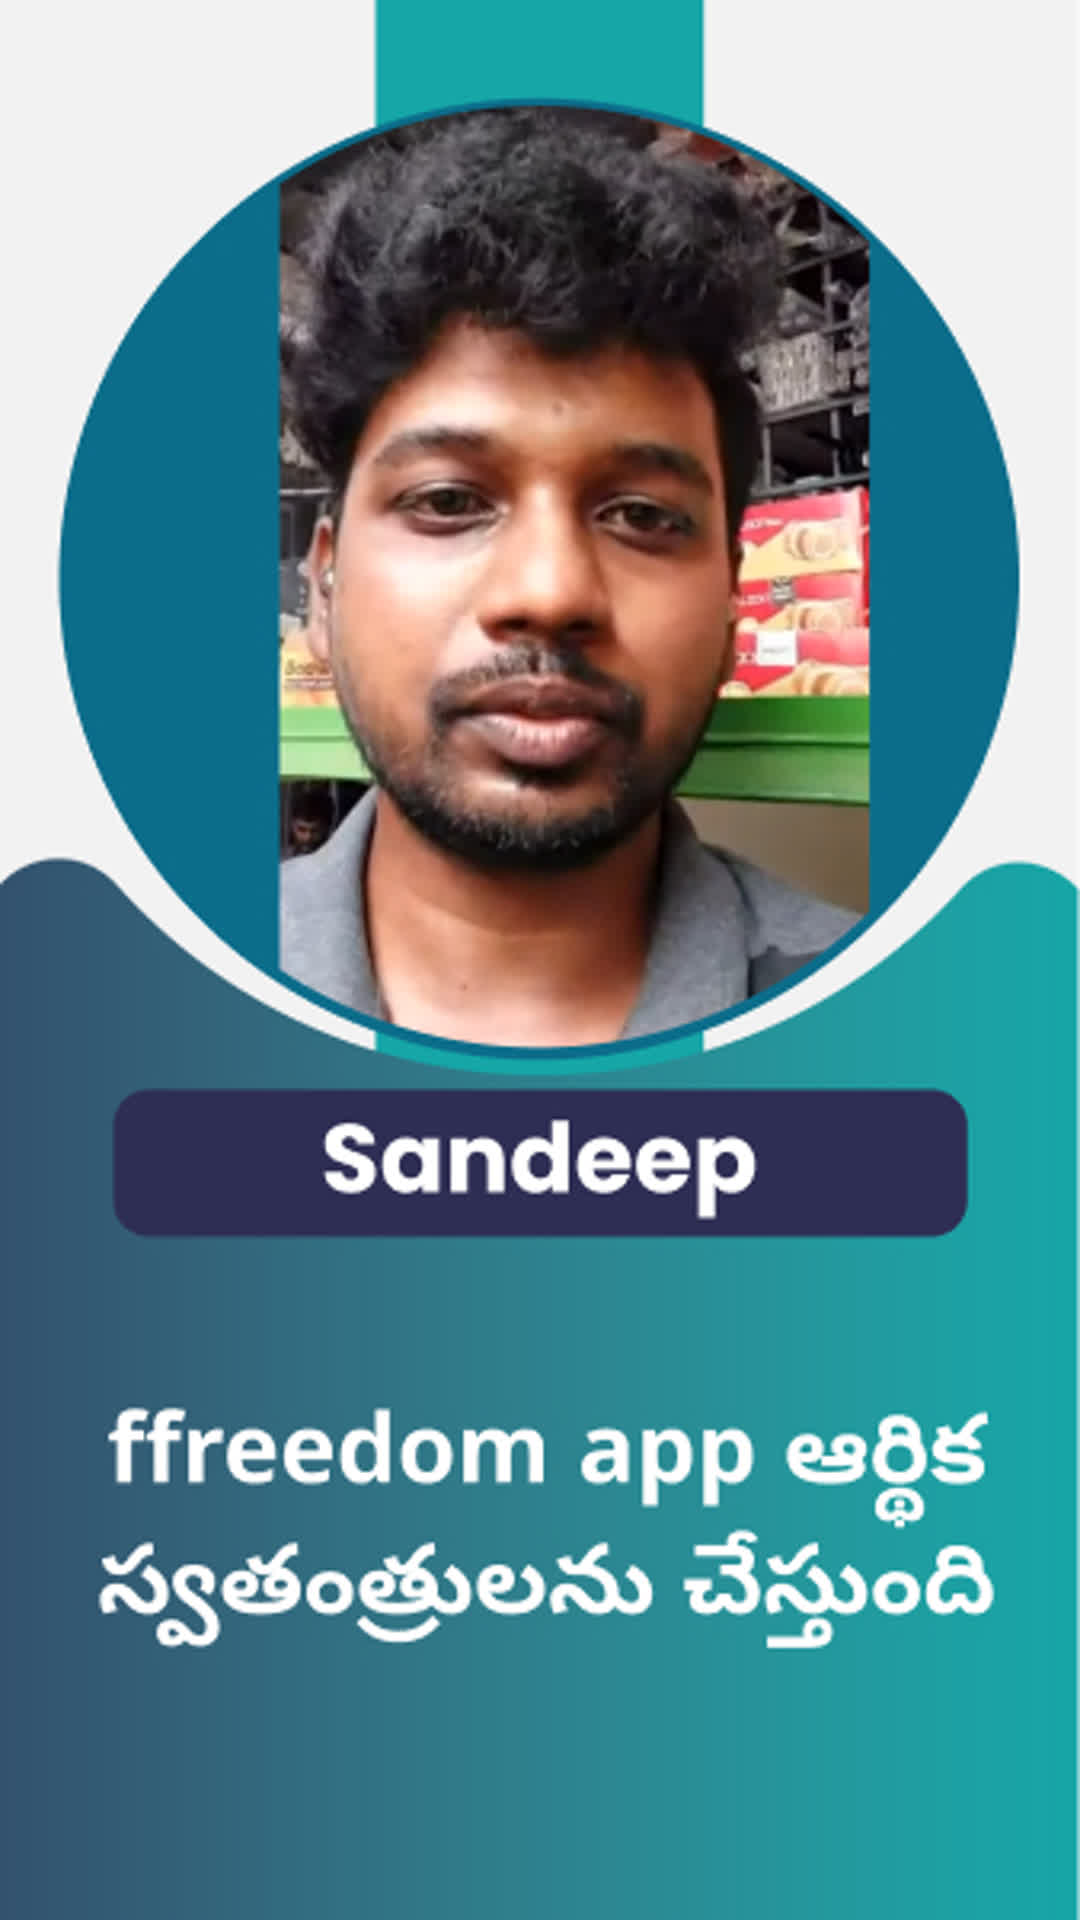 Sandeep's Honest Review of ffreedom app - Ernakulam ,Kerala